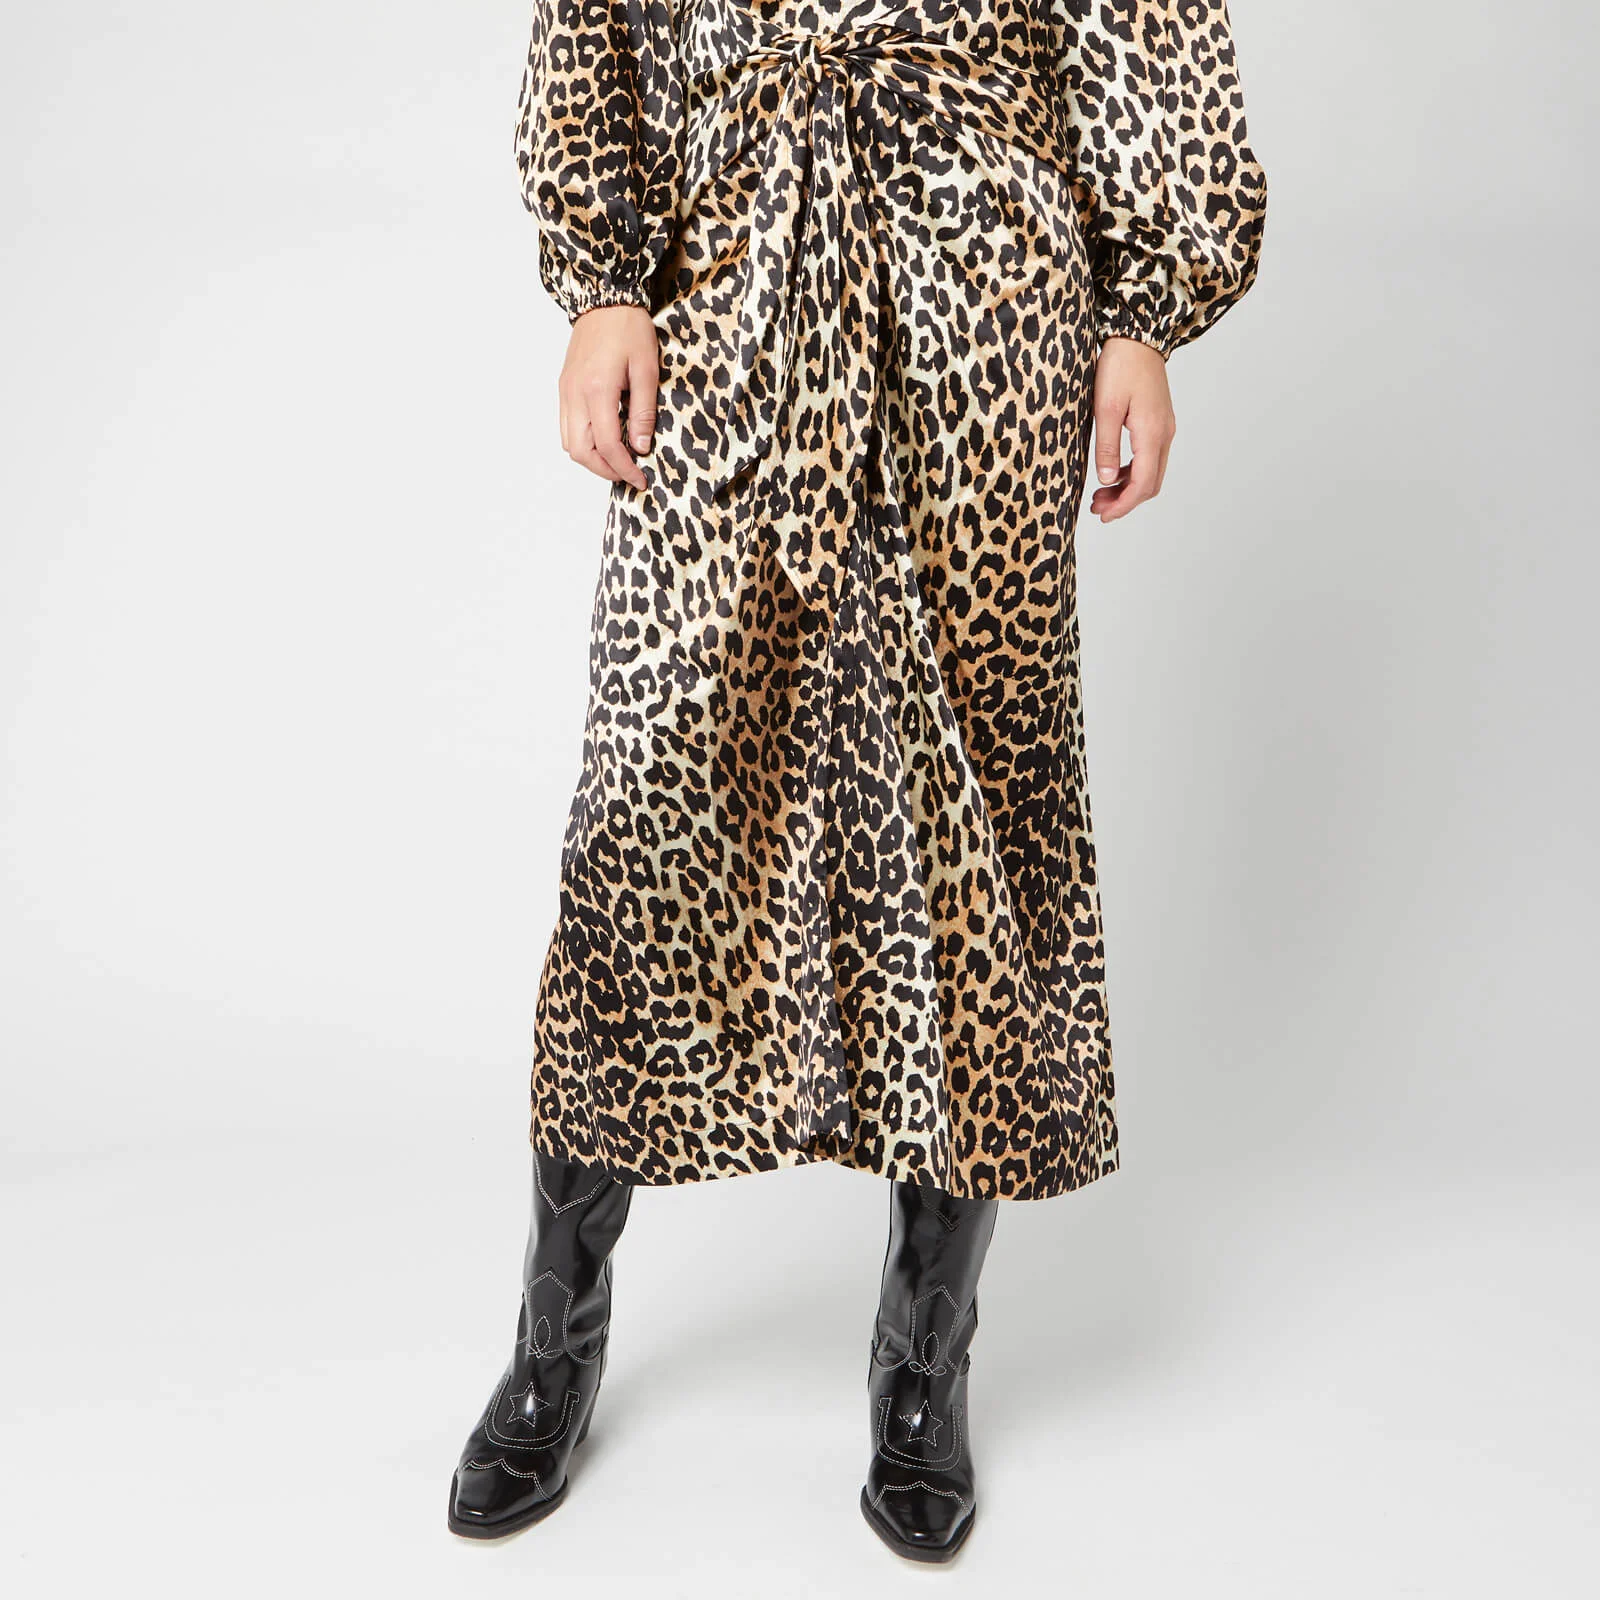 Ganni Women's Silk Stretch Satin Skirt - Leopard Image 1